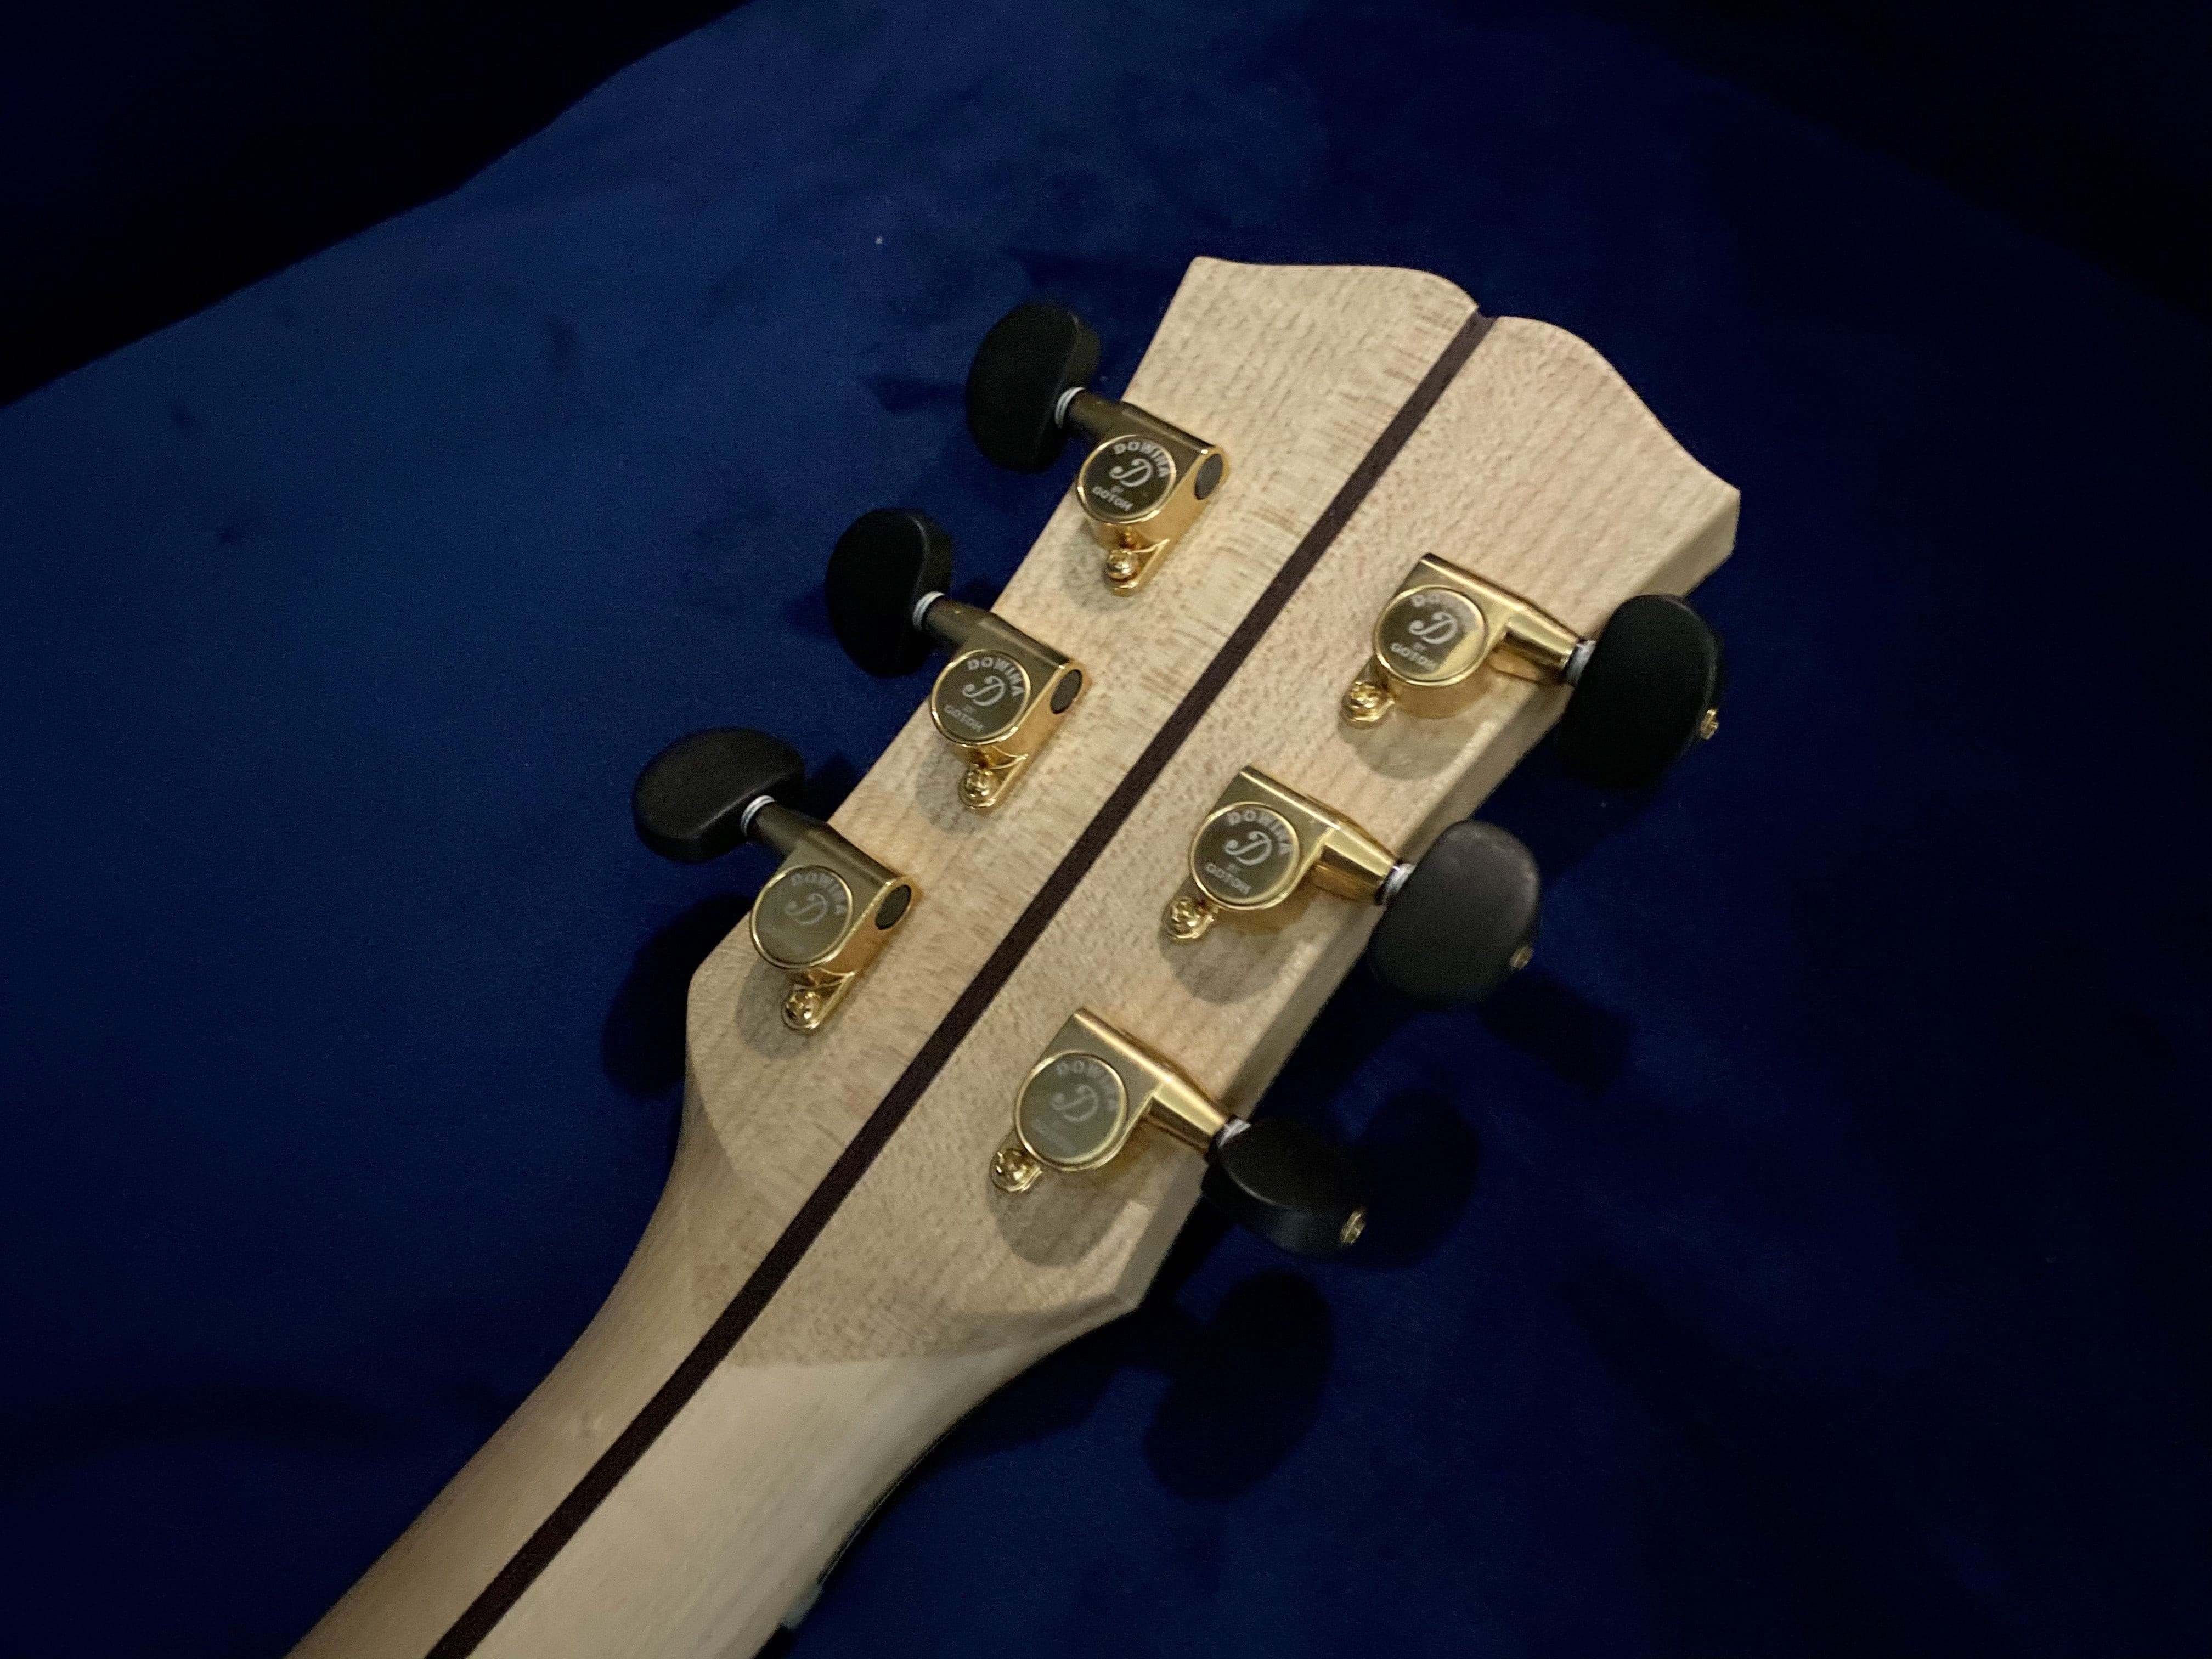 Dowina Master Build Acero JCE DS Inc Hard Case & LR Baggs Anthem, Electro Acoustic Guitar for sale at Richards Guitars.